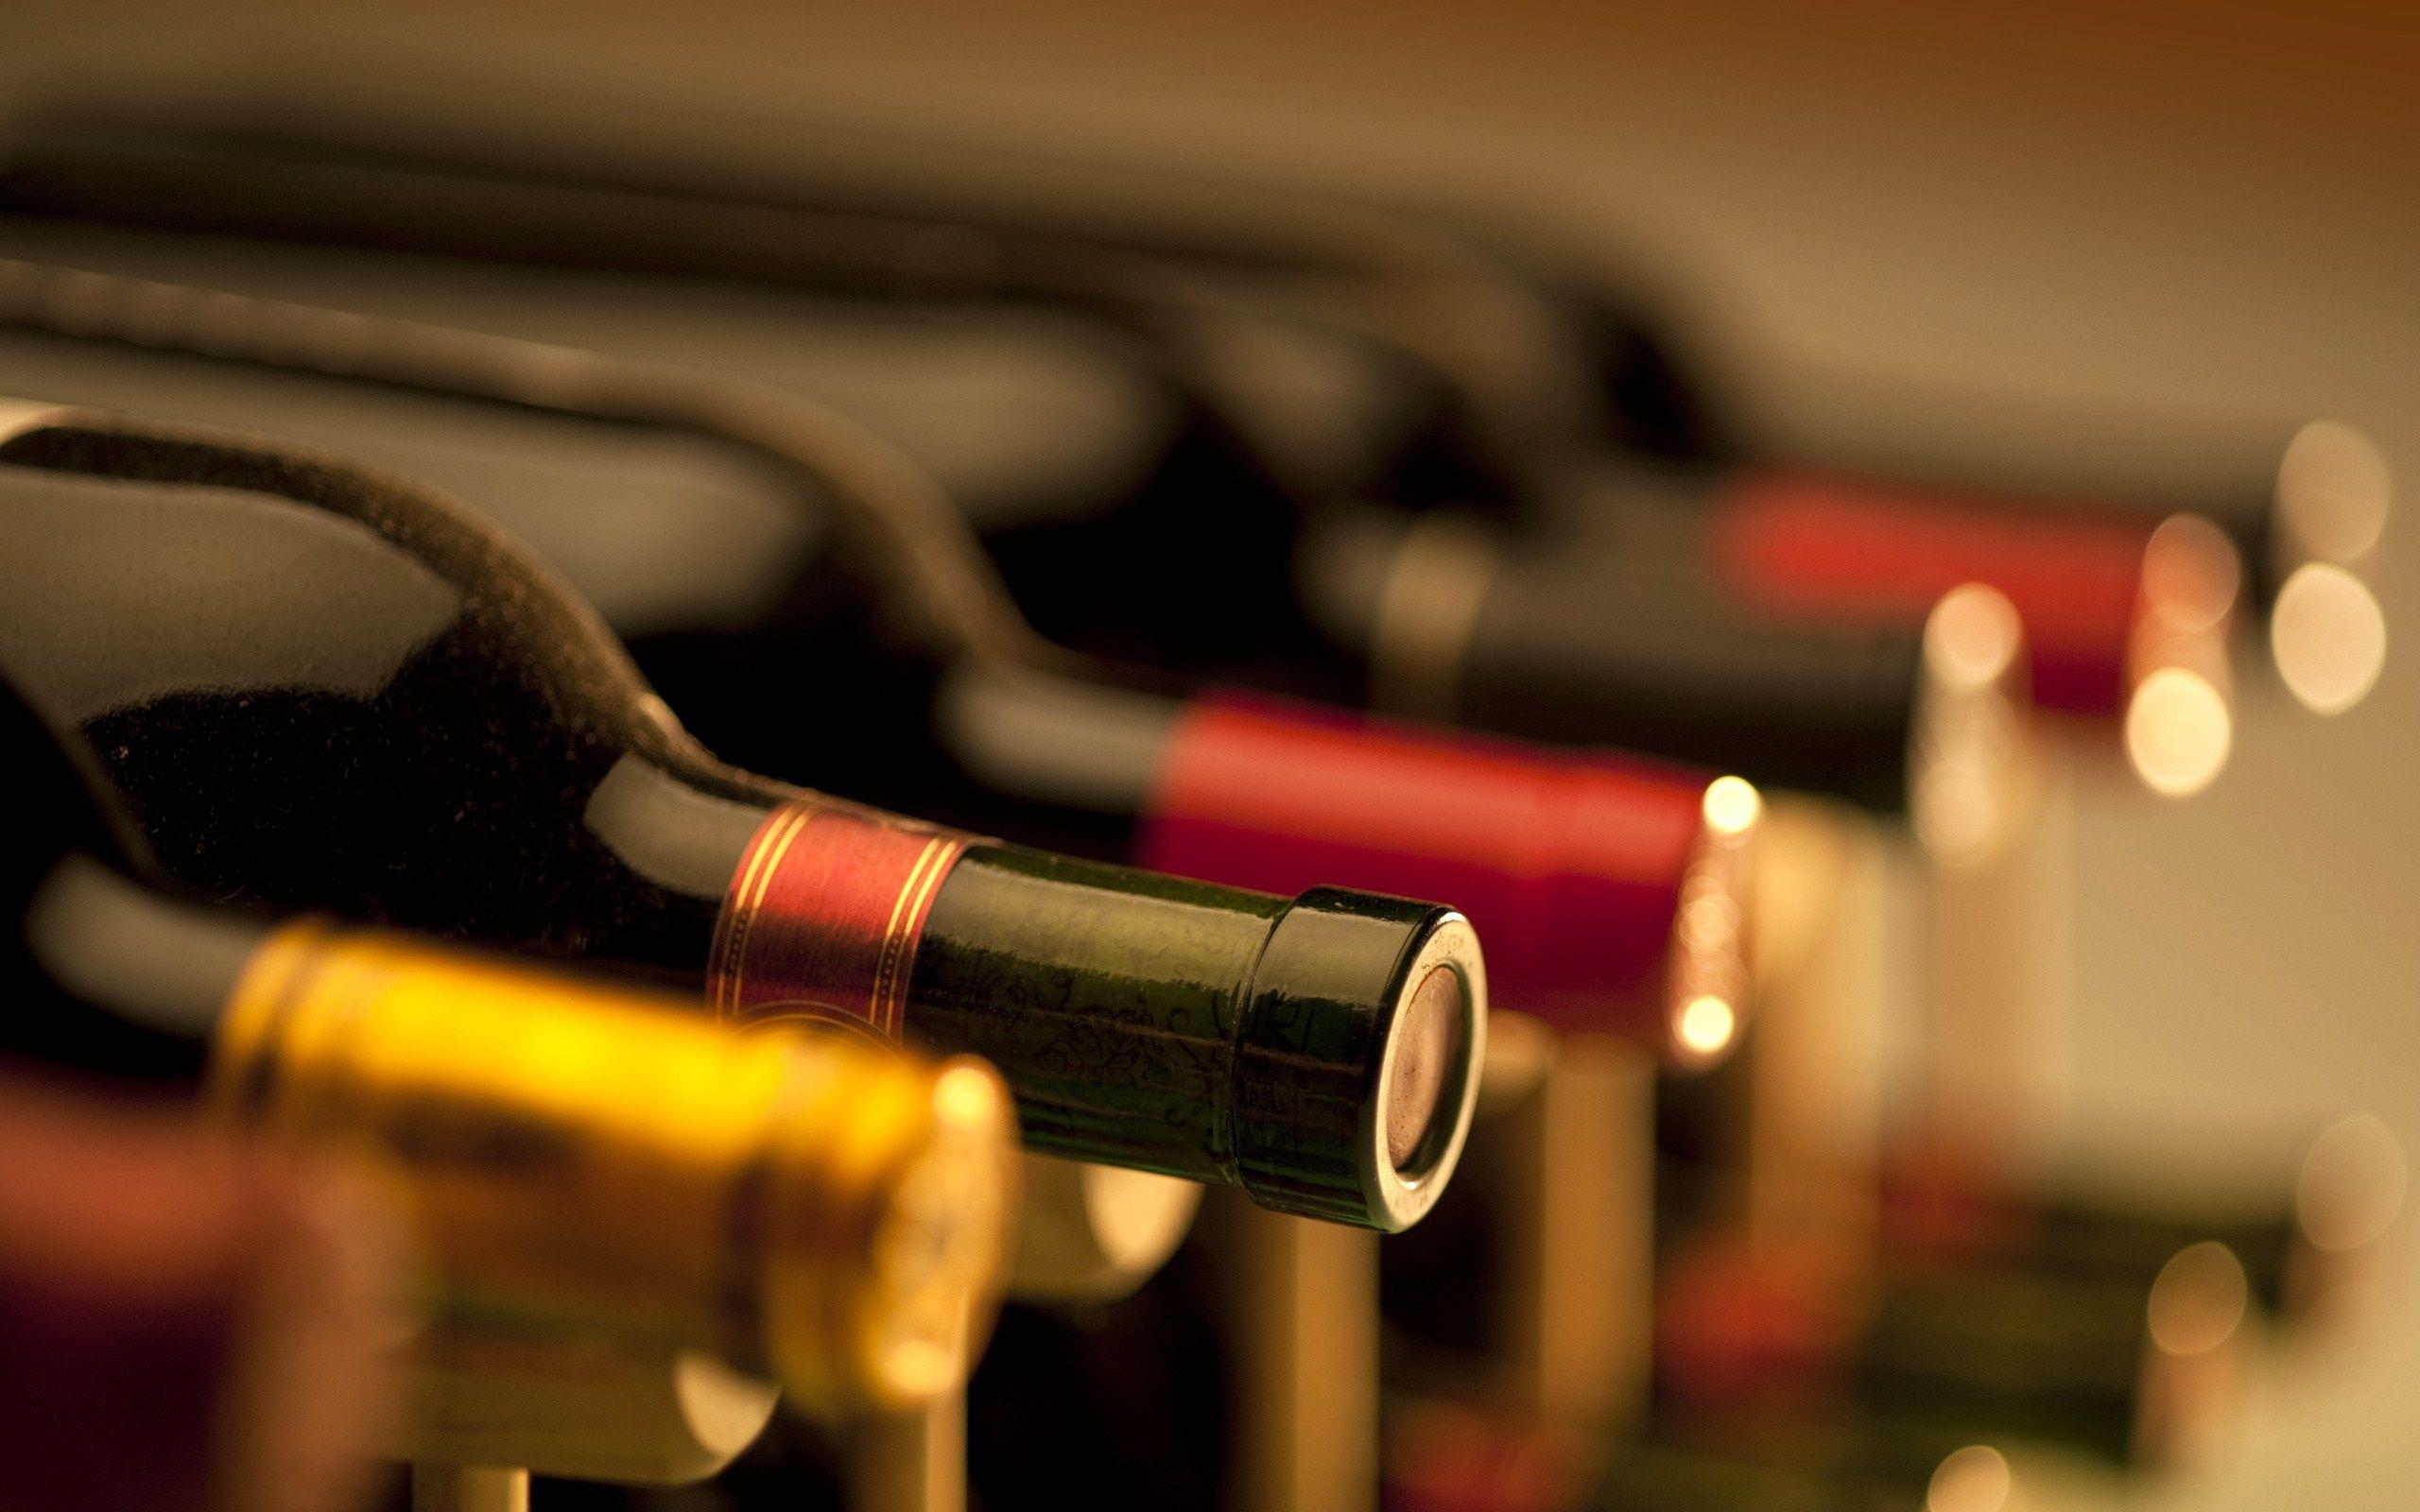 Find out: Wine Bottles wallpaper /wine